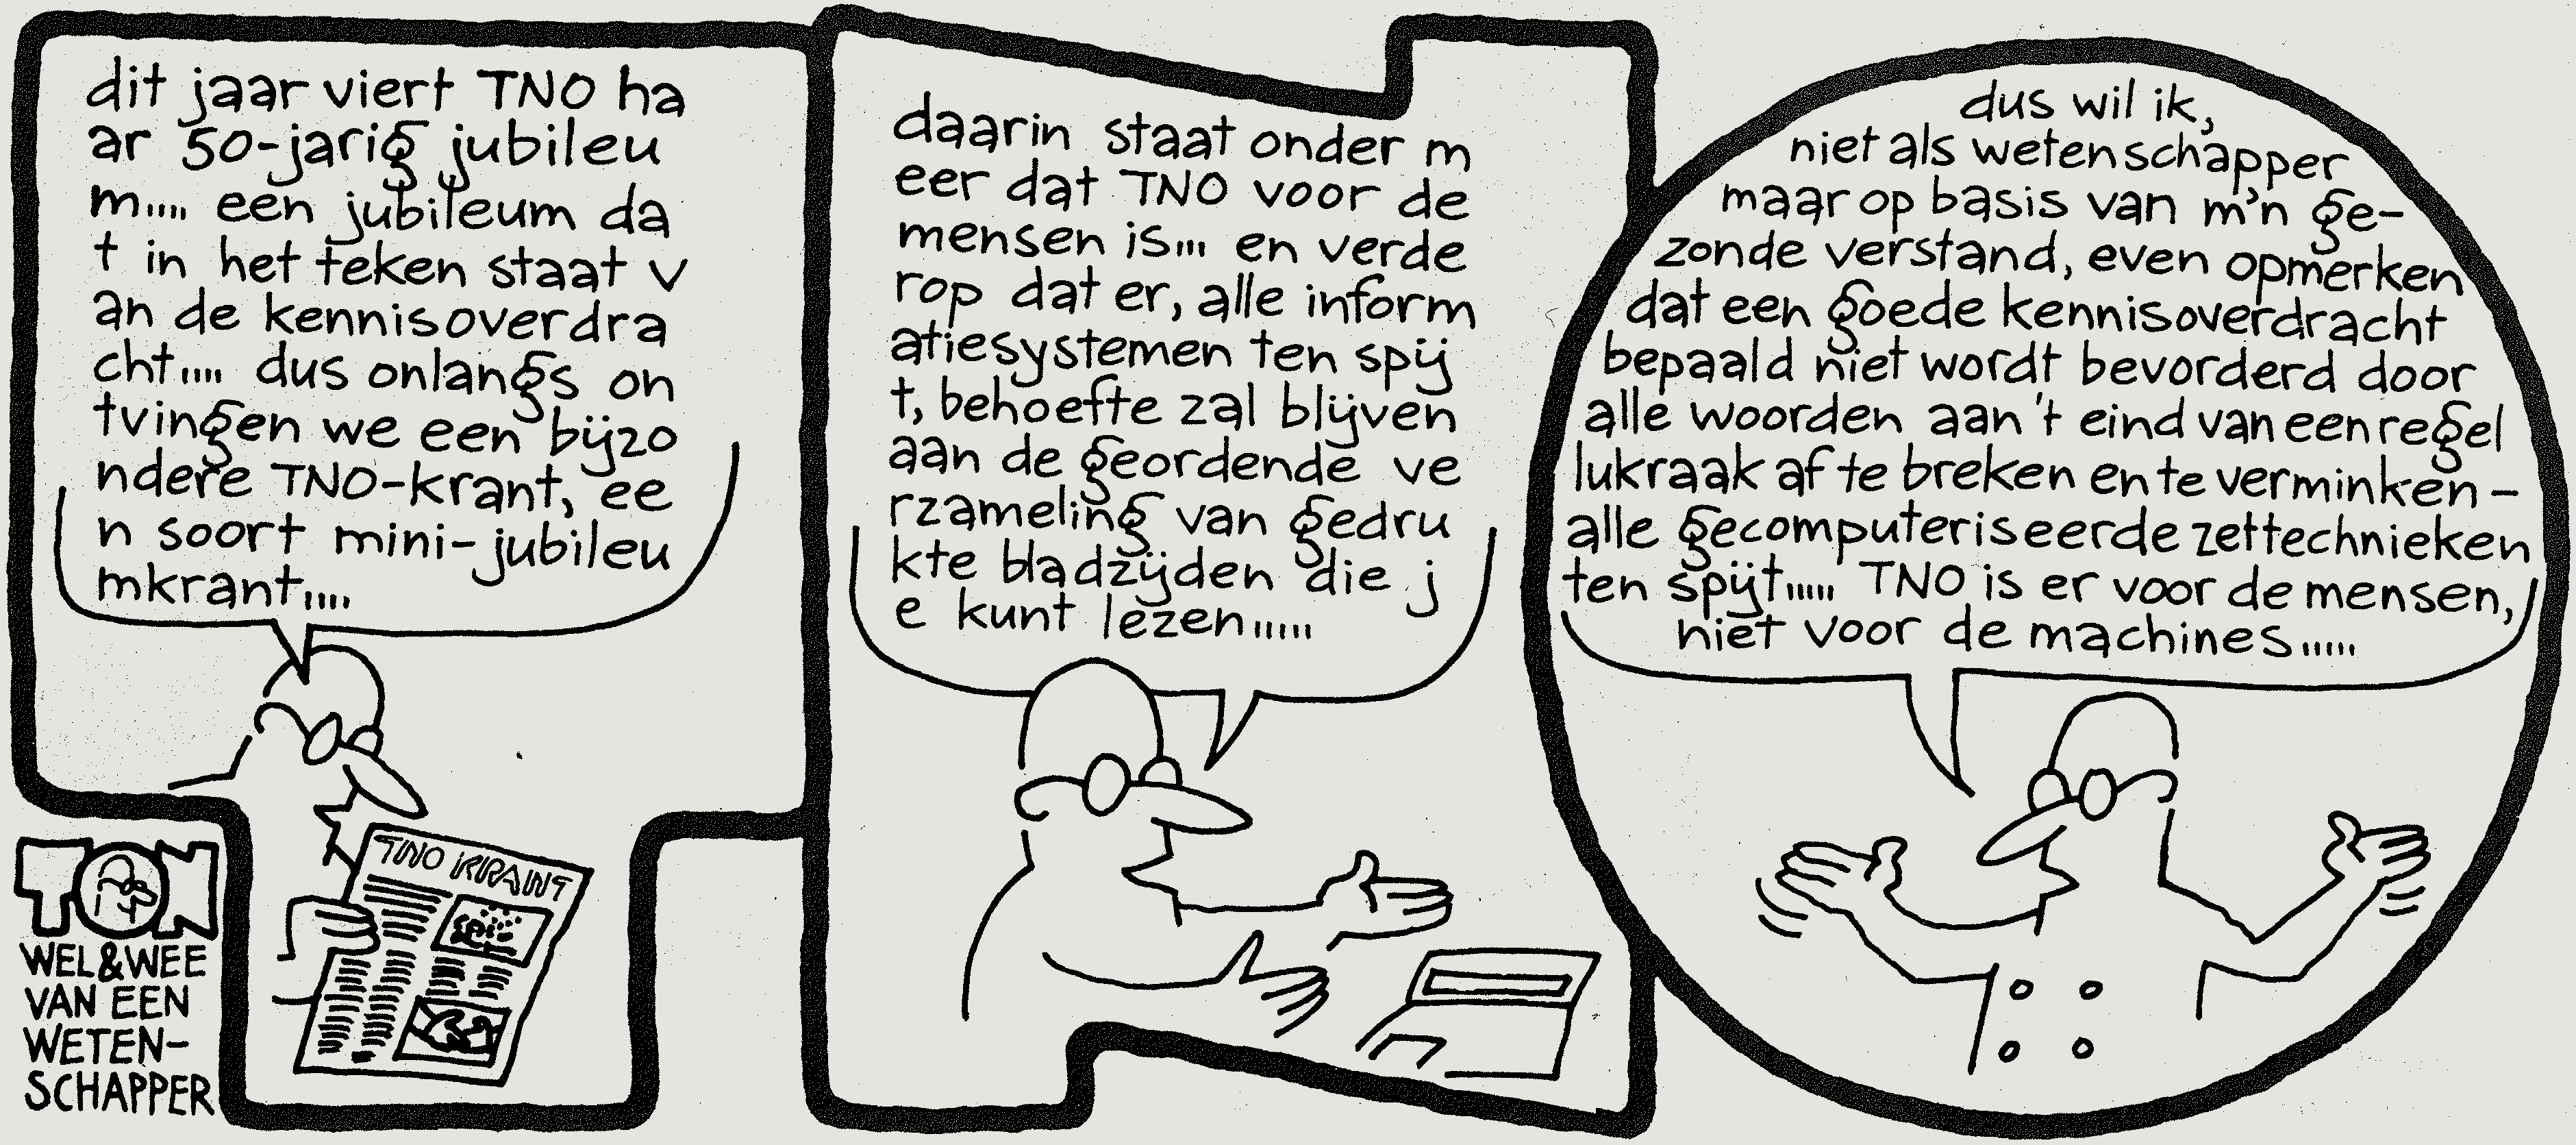 TNO krant
cartoon 1982
(nederlands)